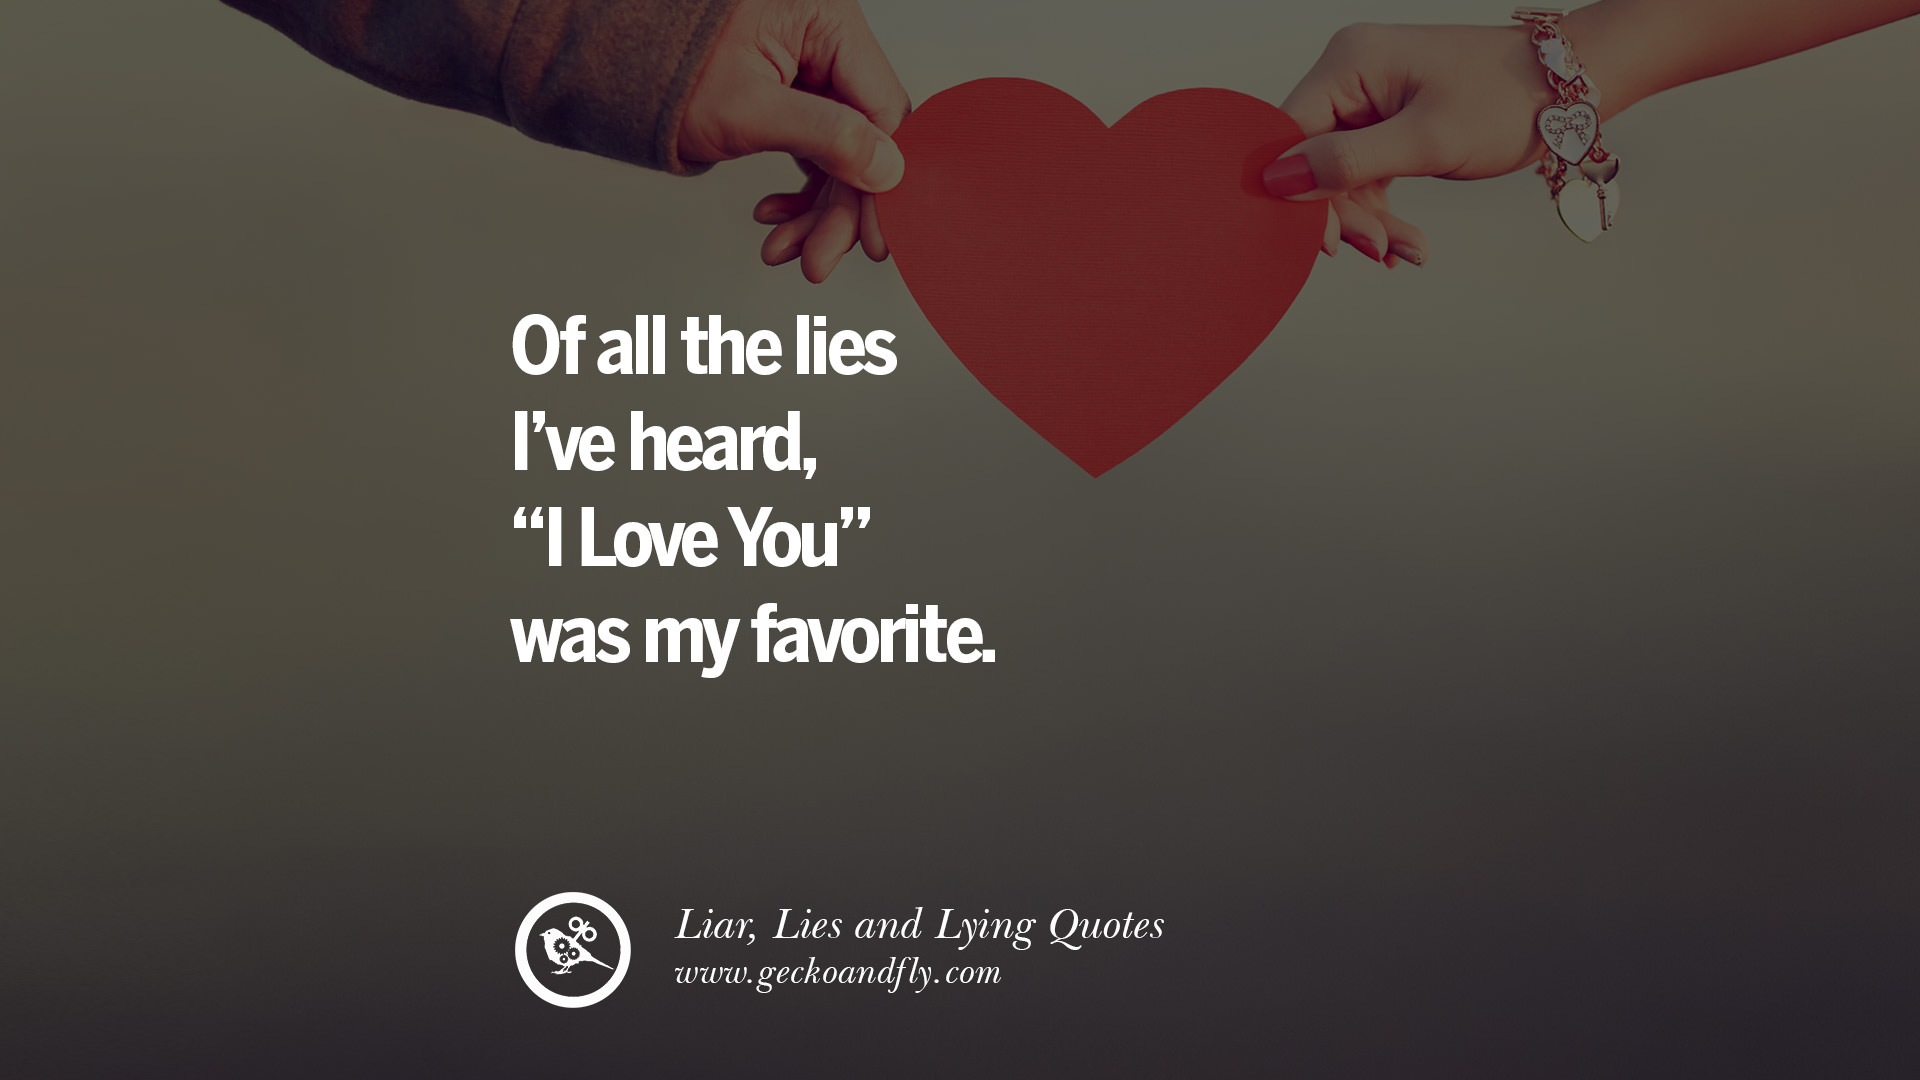 lies lying liar quotes relationship boyfriend lie ve favorite heard trust truth geckoandfly girlfriend